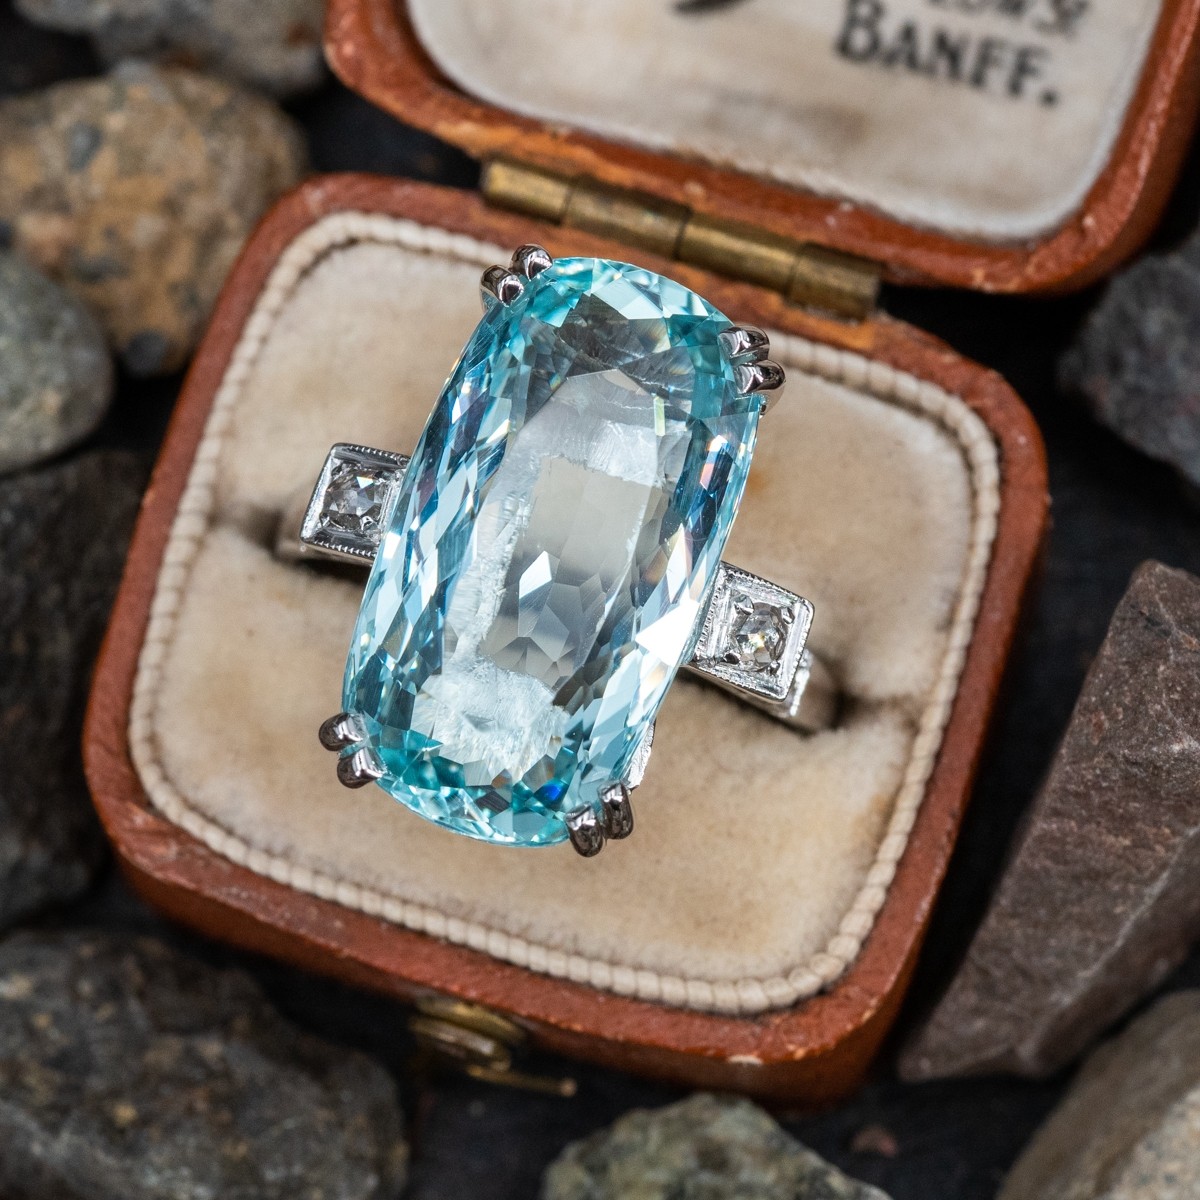 Vintage Aquamarine Cocktail Ring w/ Diamond Accents 18K White Gold